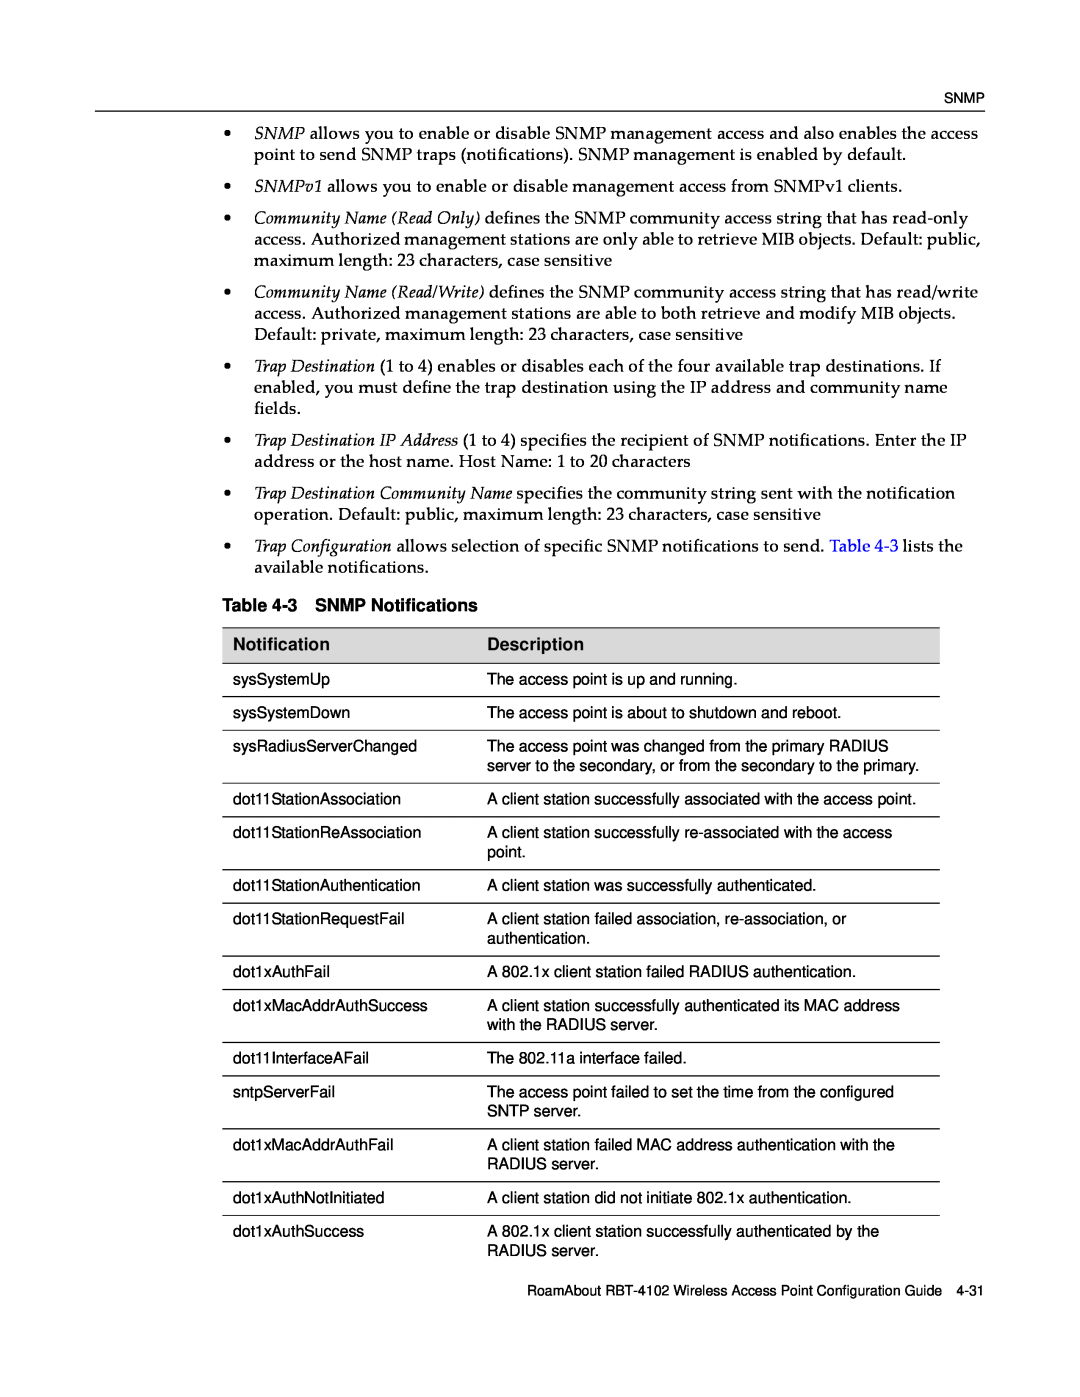 Enterasys Networks RBT-4102 manual 3 SNMP Notifications, Description 